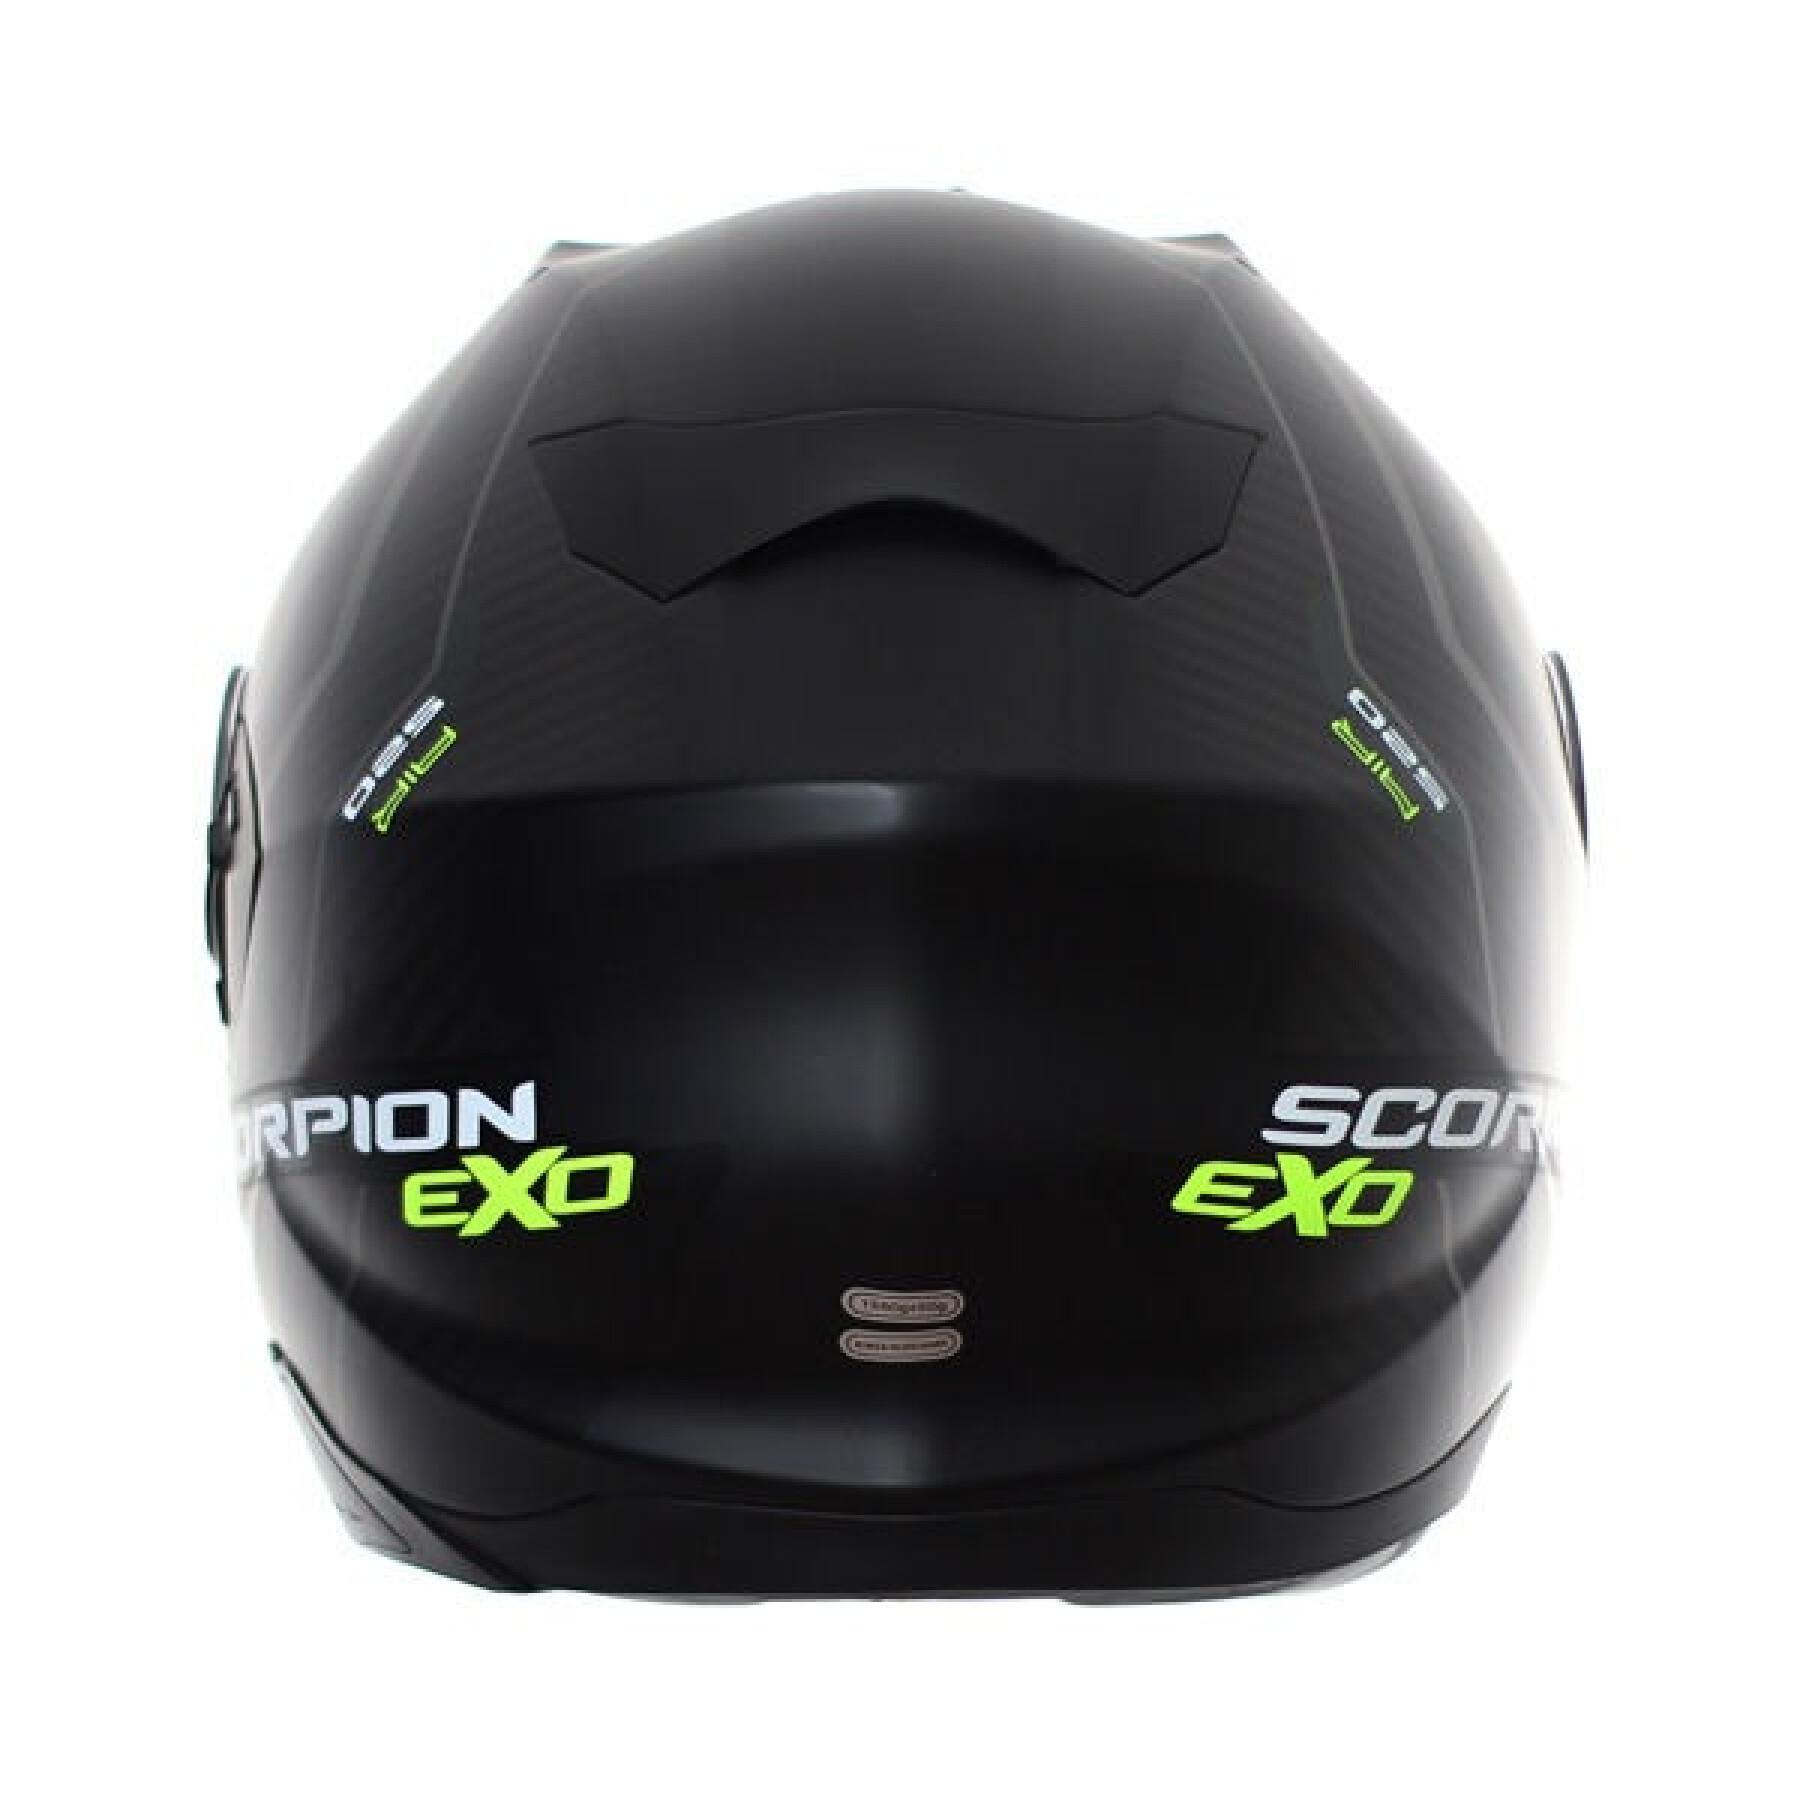 Capacete facial completo Scorpion Exo-520 Air SHADE